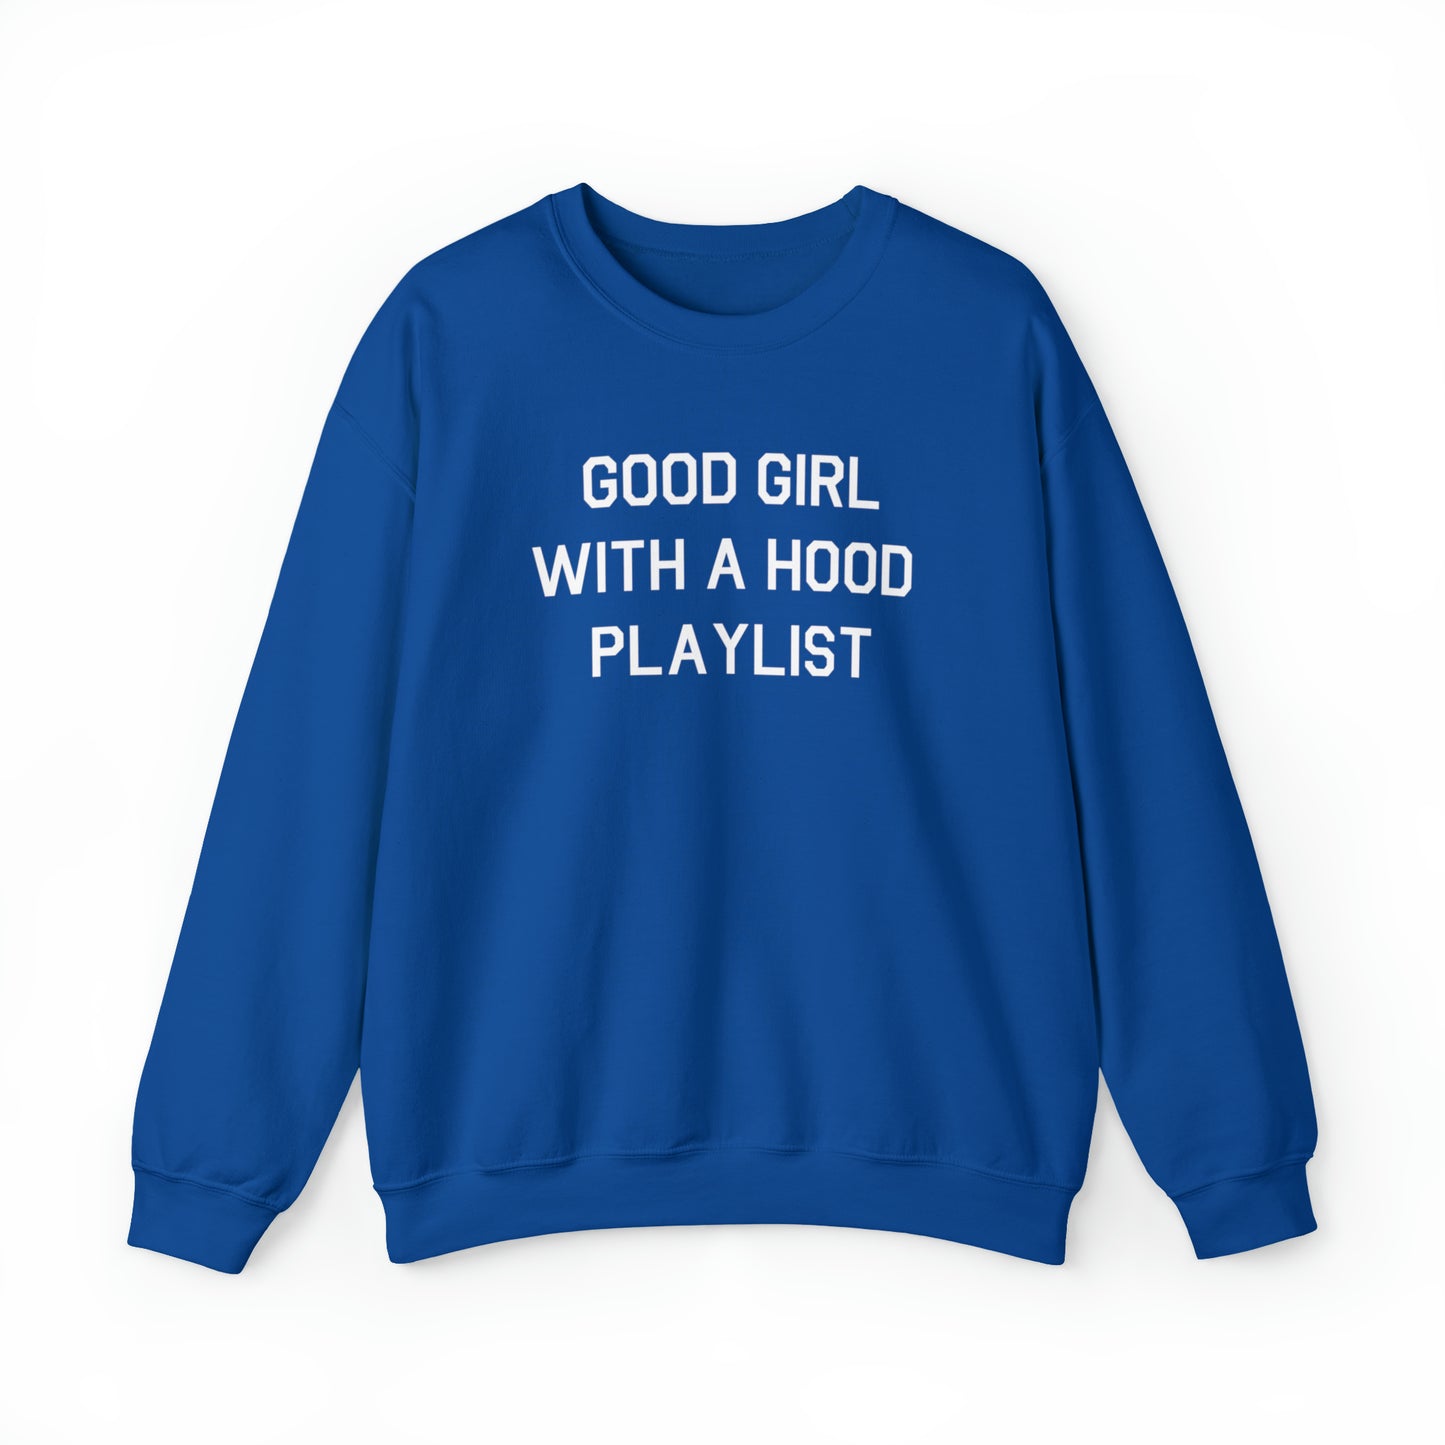 Good Girl With A Hood Playlist Crewneck Sweatshirt for a Good Girl